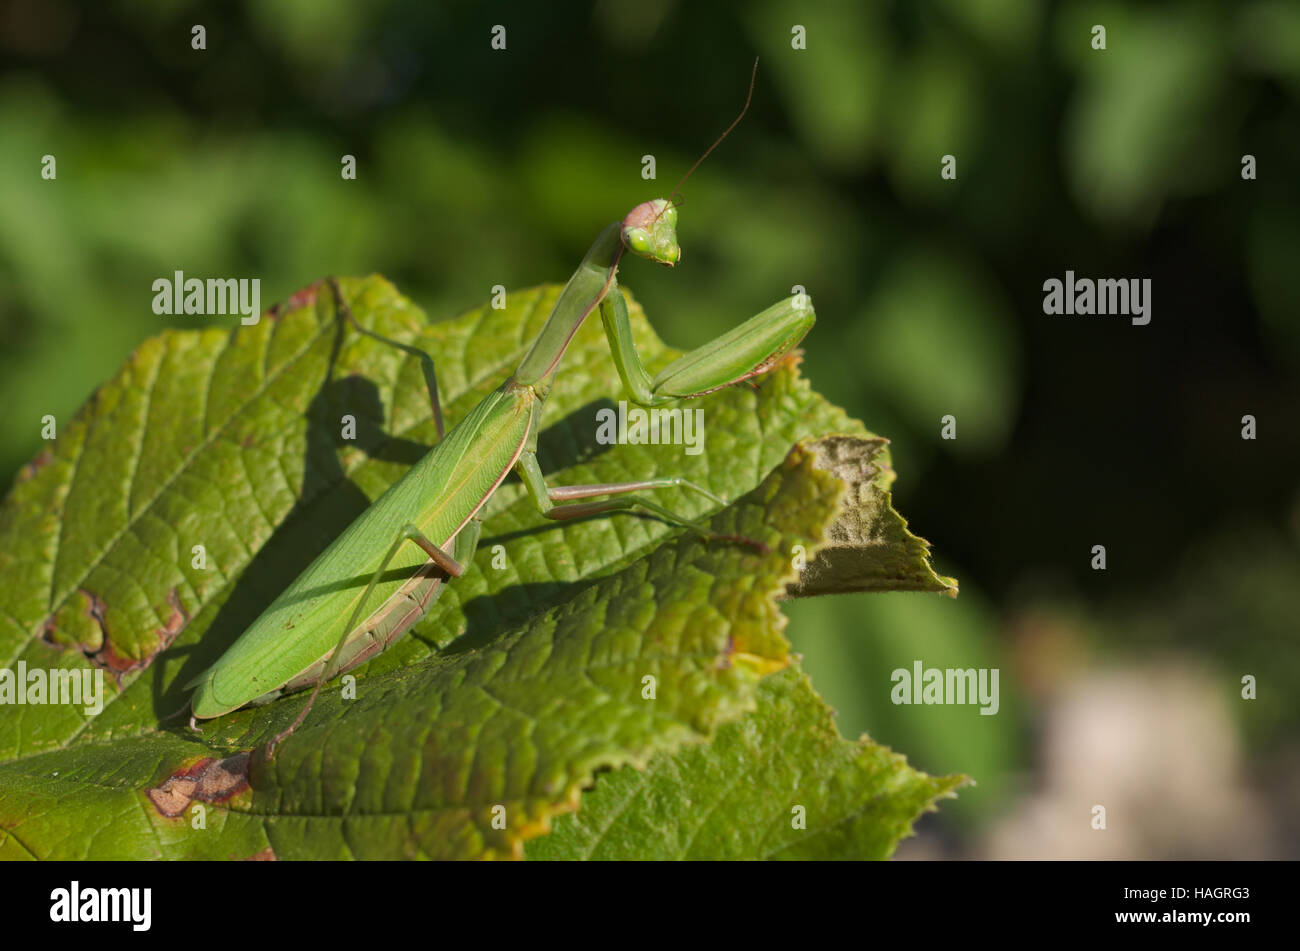 European or praying mantis (Mantis religiosa) hunting in an Italian garden Stock Photo